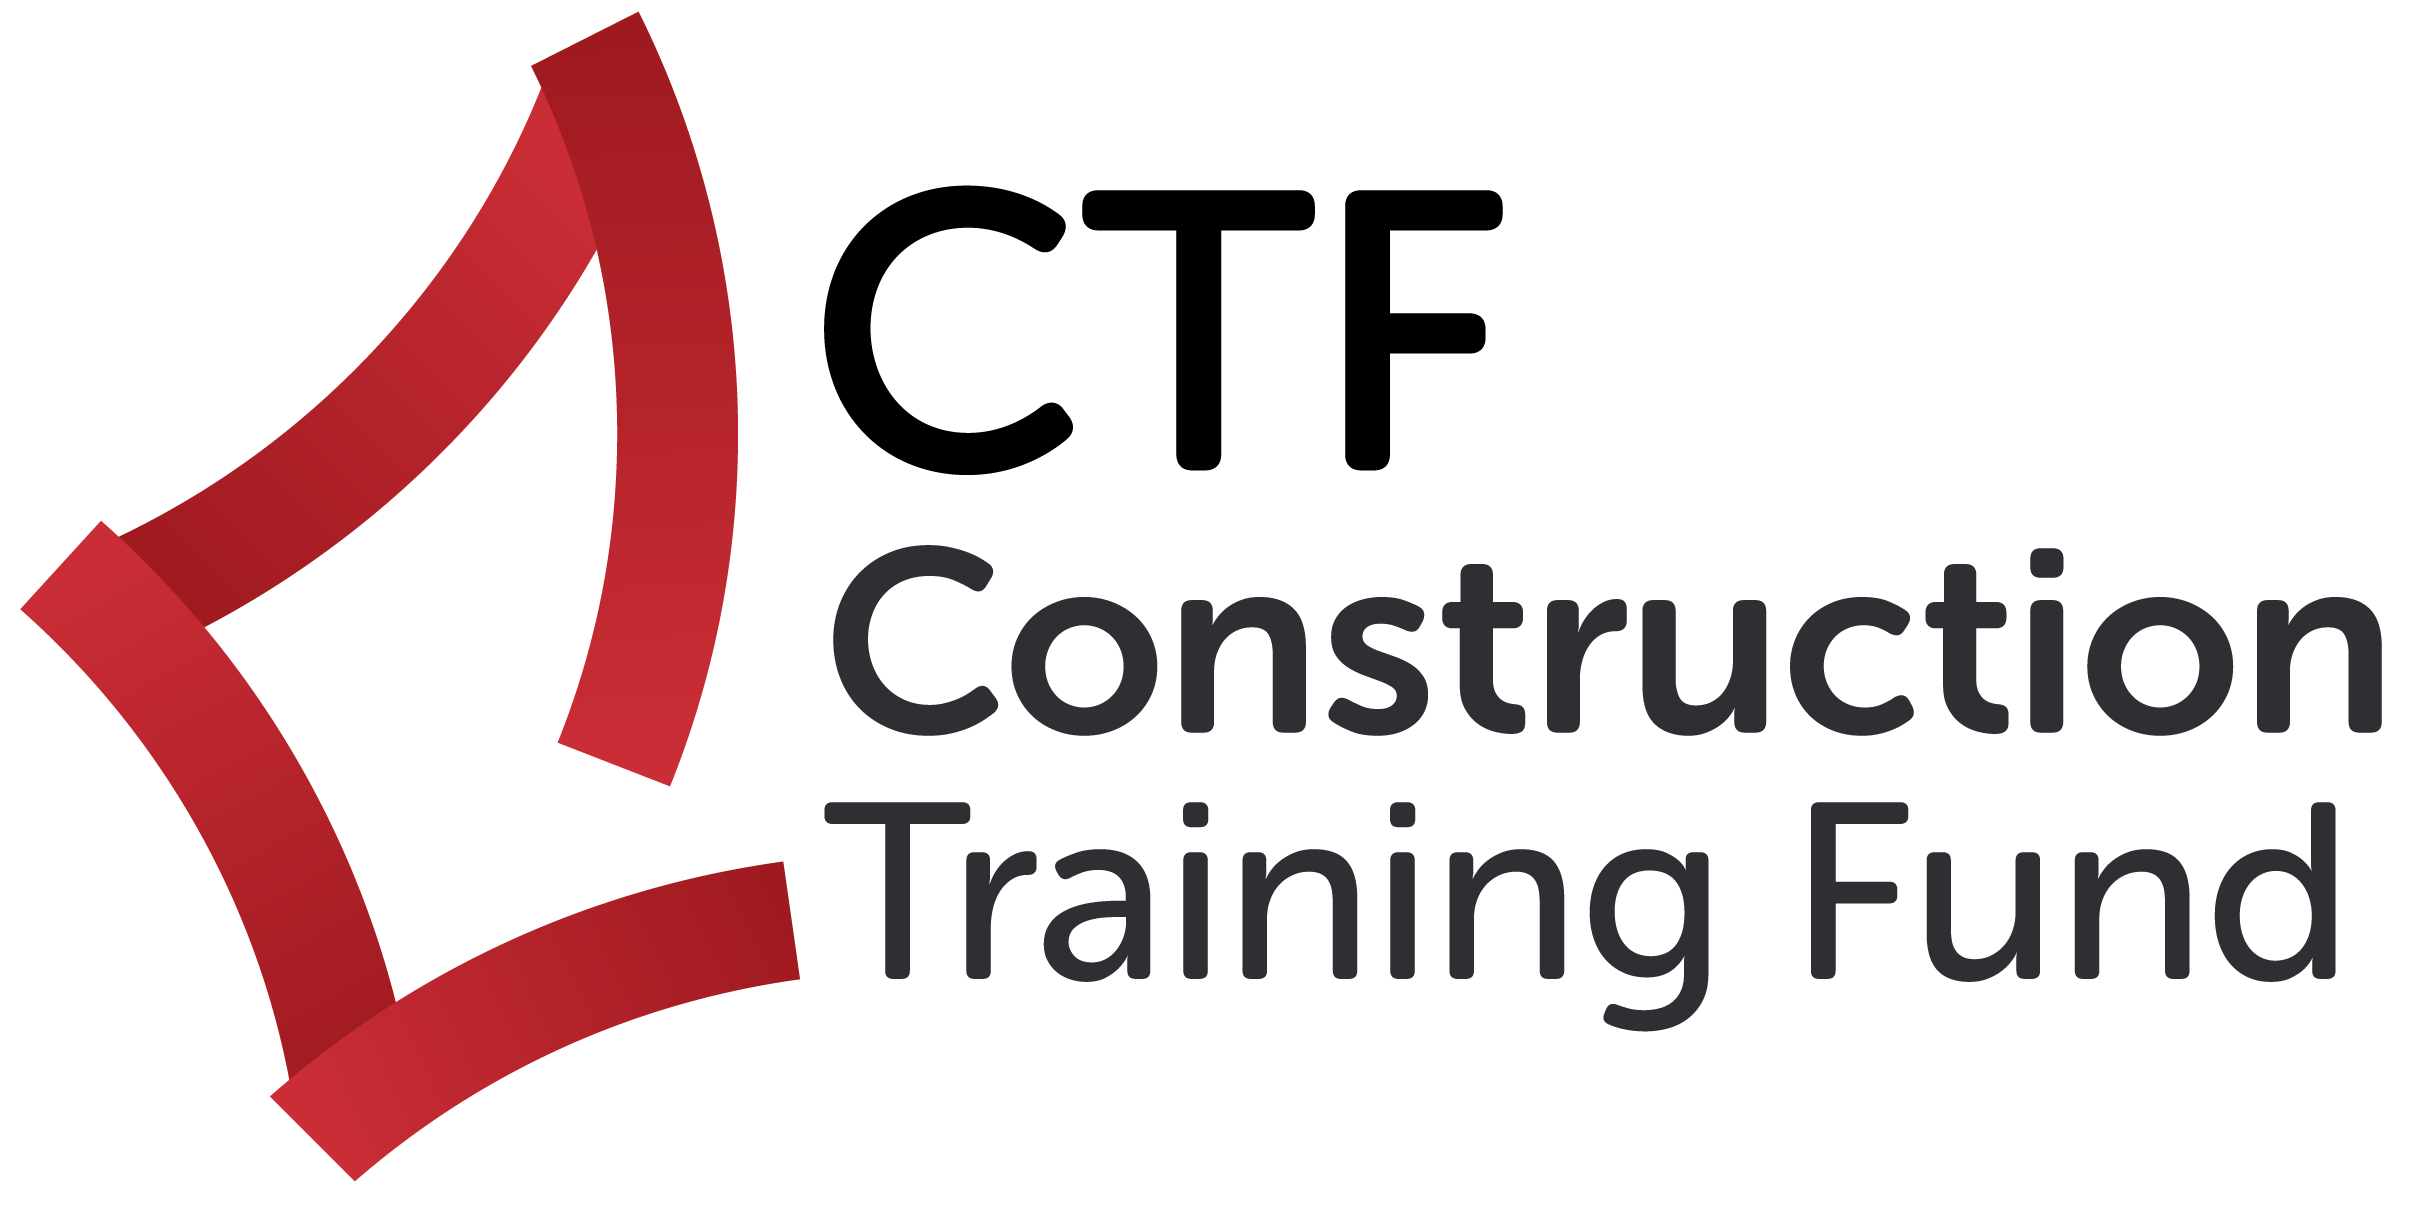 Construction Training Fund